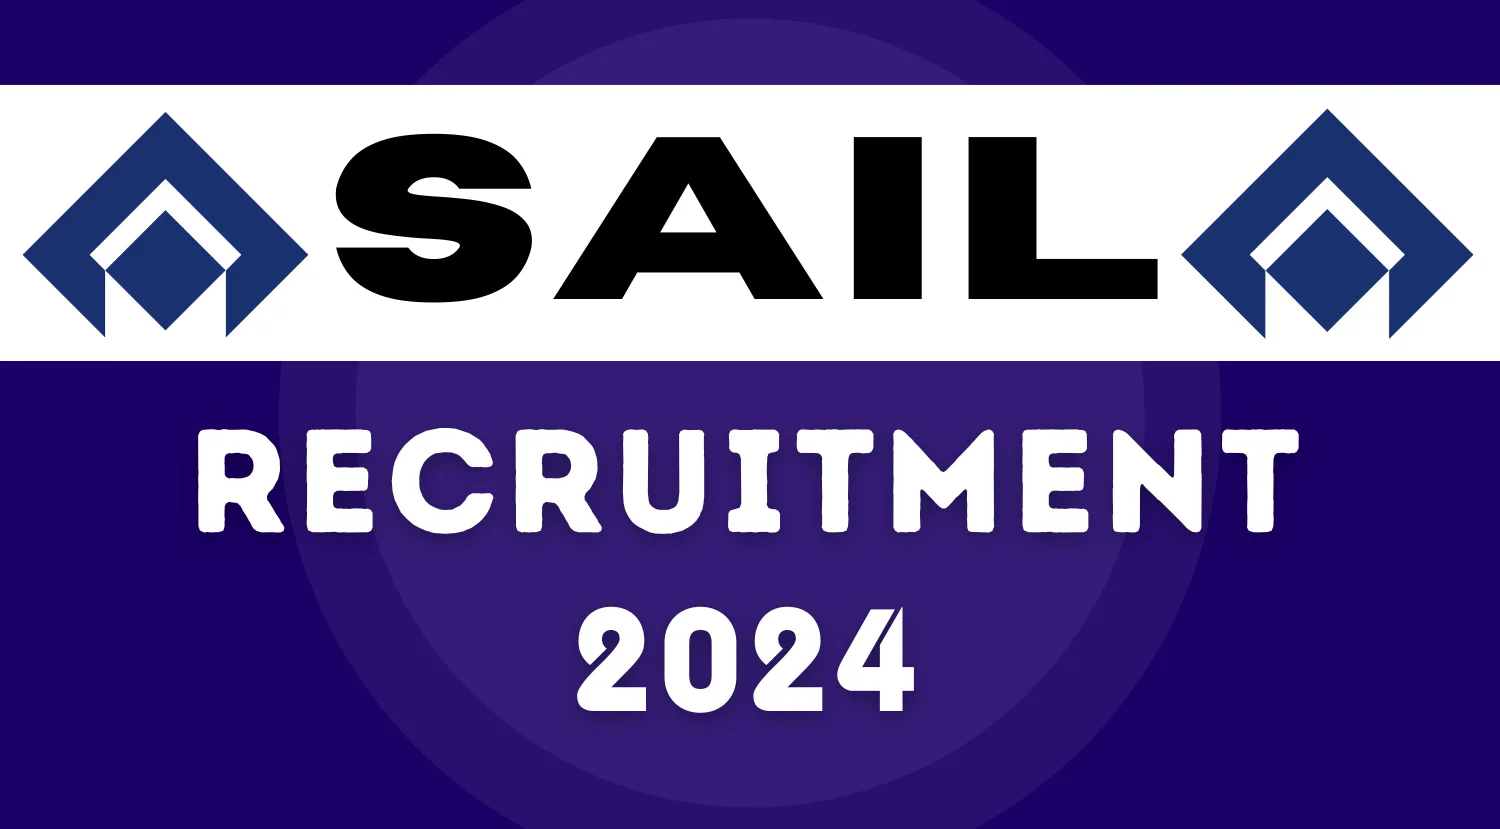 SAIL Director Recruitment 2024